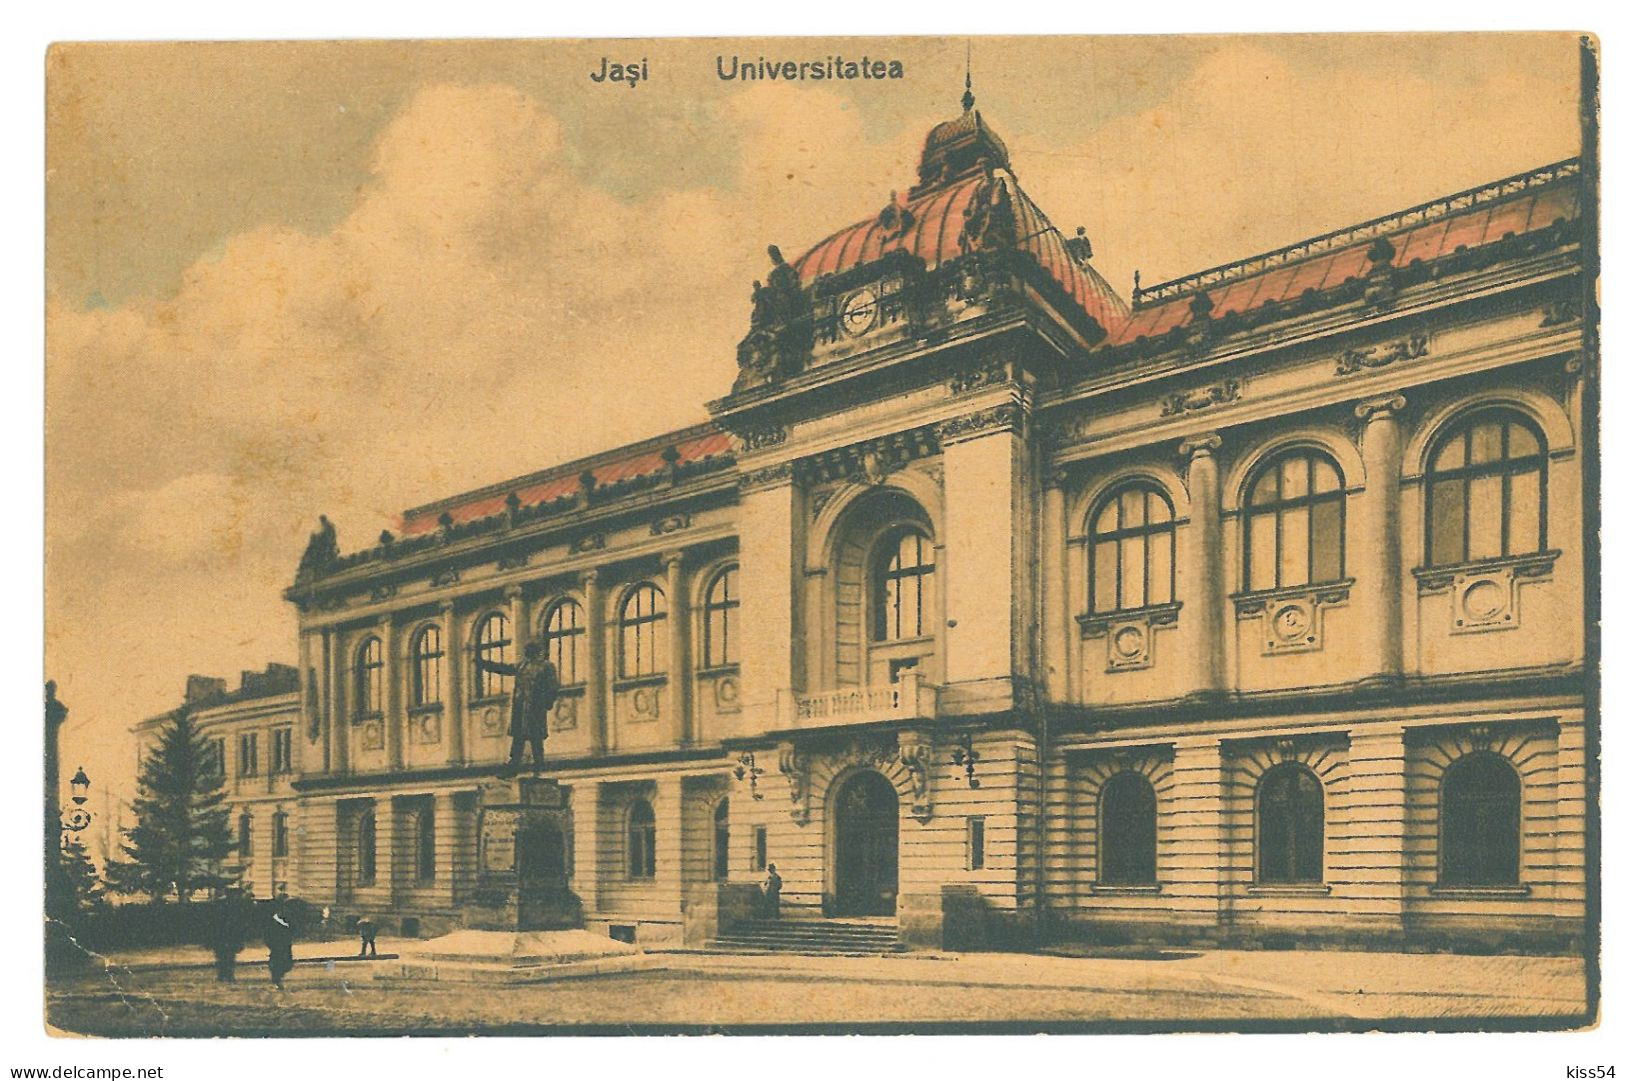 RO - 25238 IASI, University, Romania - Old Postcard - Unused - Romania